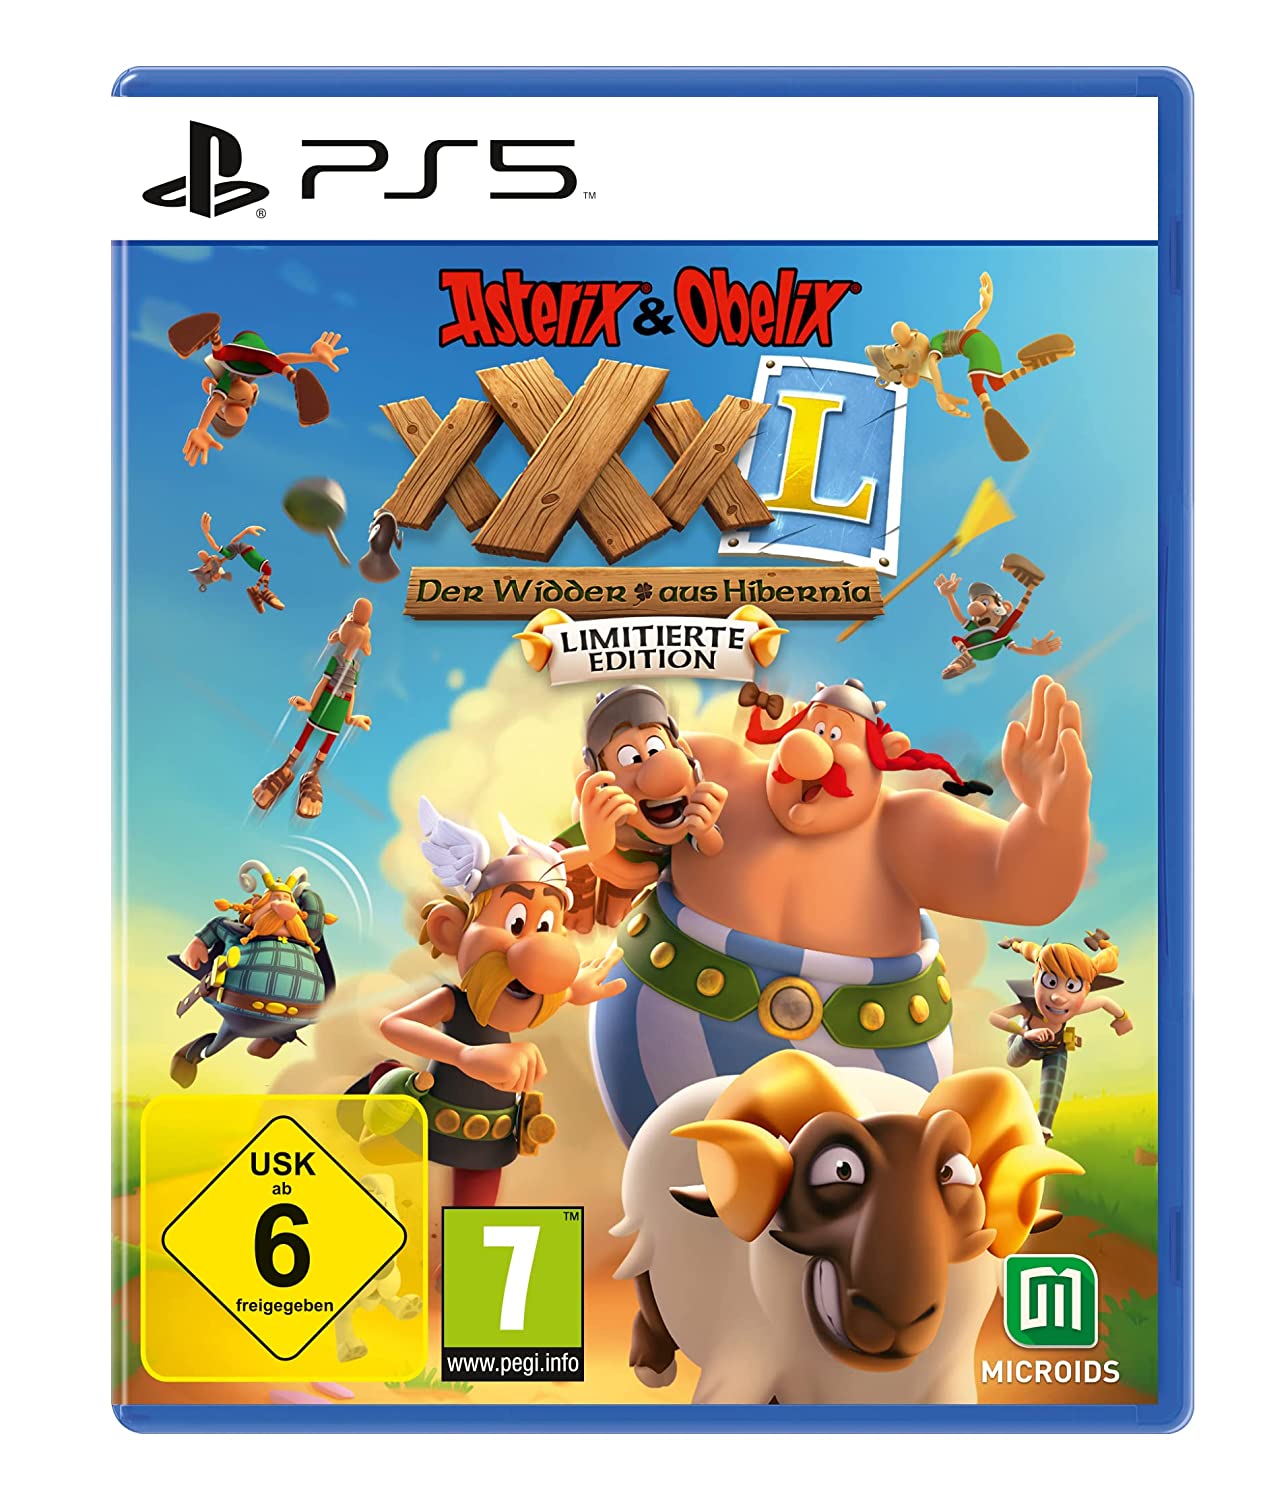 Asterix & Obelix XXXL: Der Widder aus Hibernia - Limited Edition - [PS5]